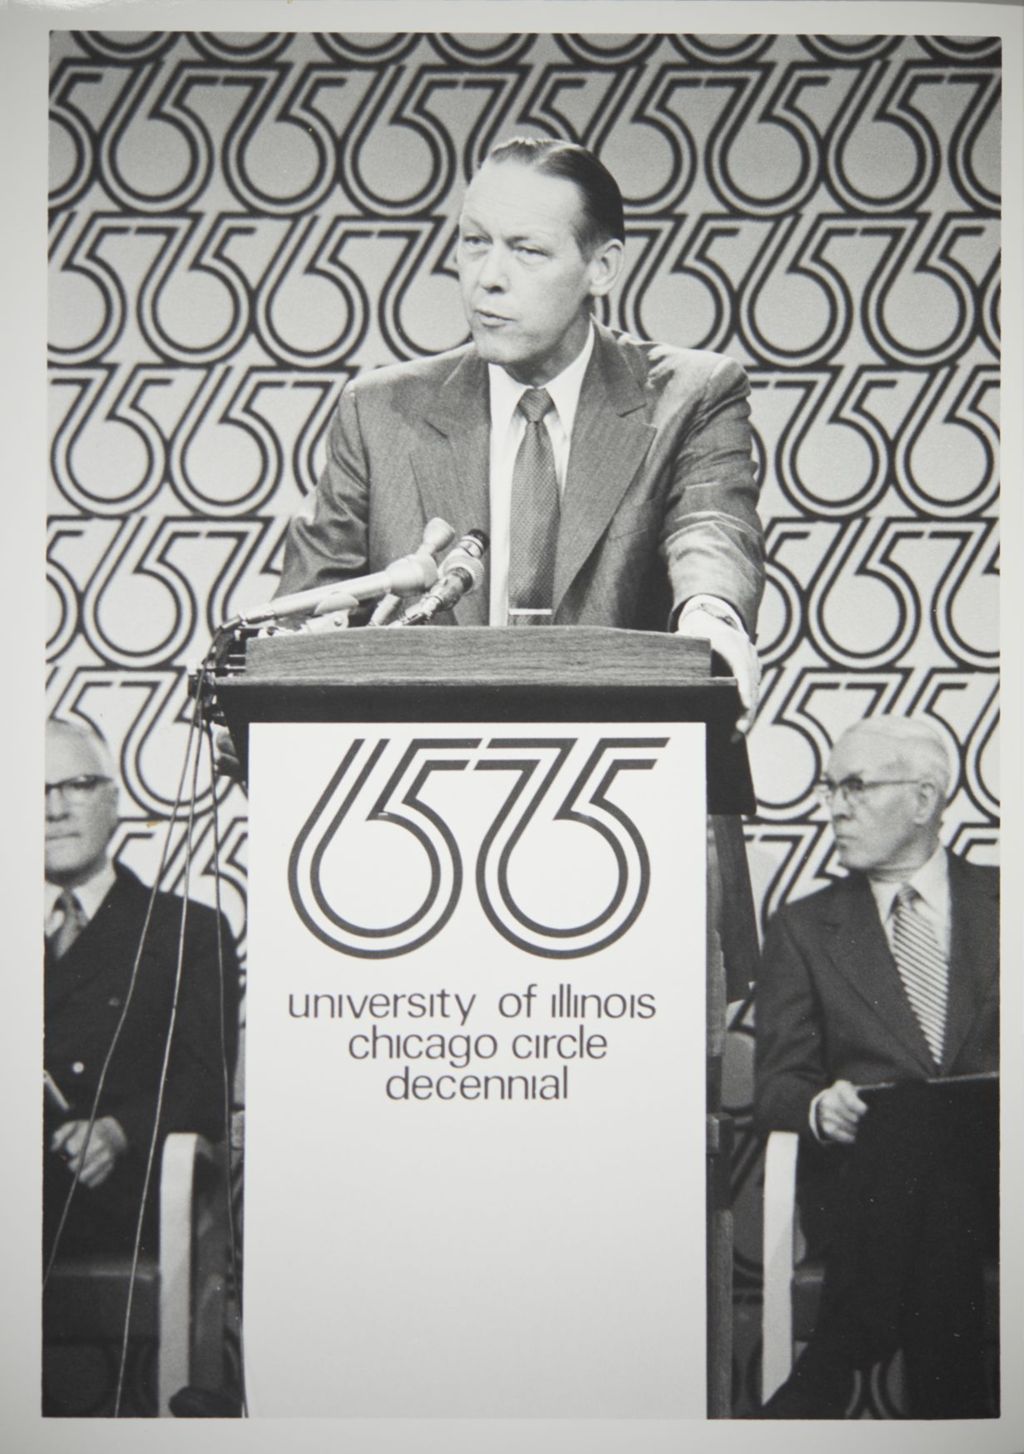 Miniature of University of Illinois President John E. Corbally speaking at the Decennial Celebration